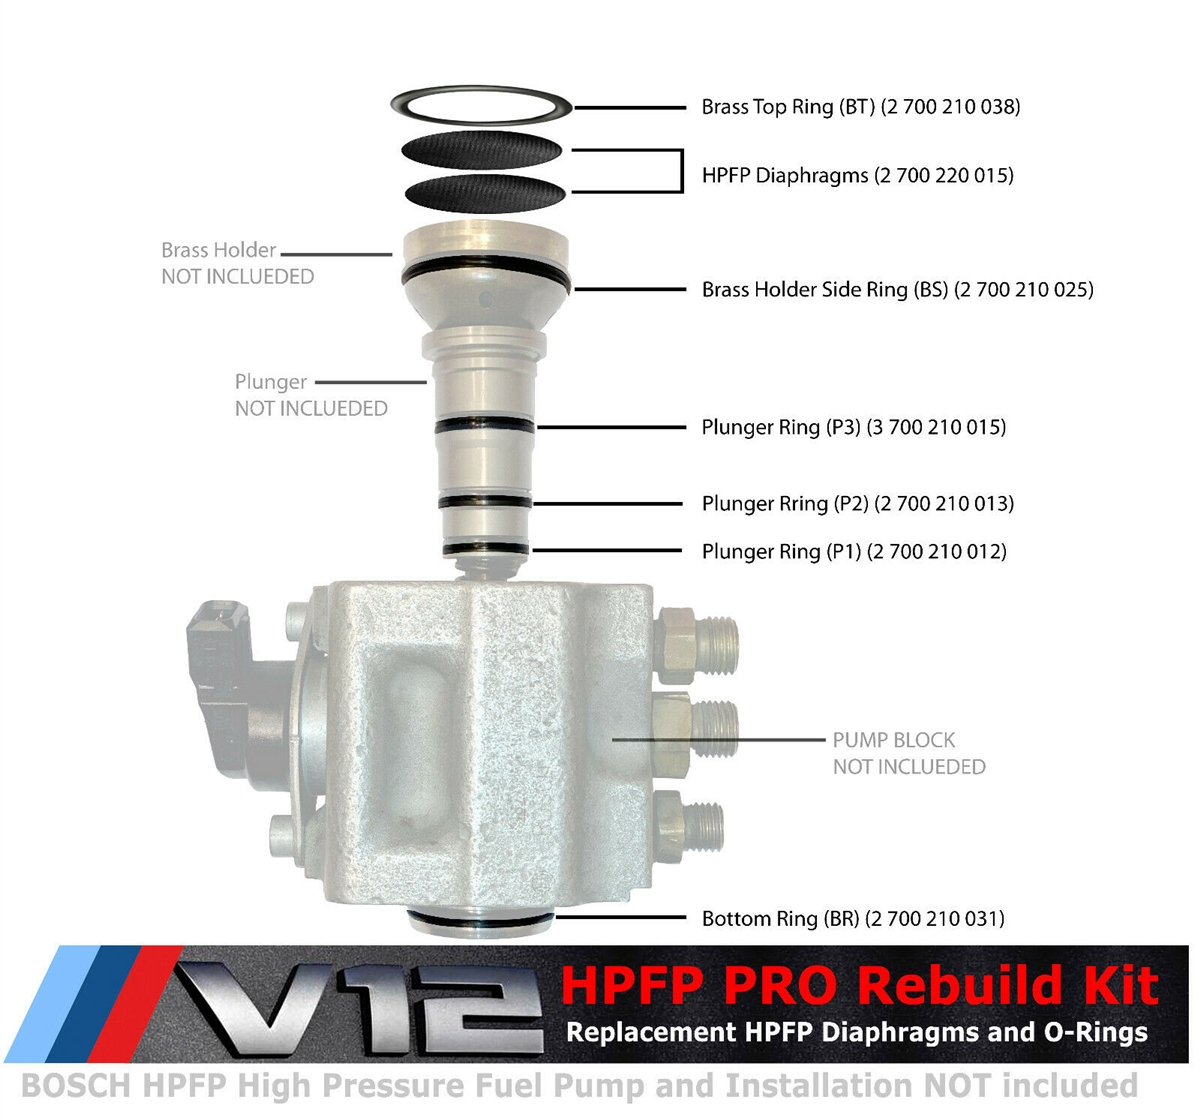 HPFP Pump Pro Rebuilding Kit for Bosch HPFP Bosch High Pressure Fuel Pump  in BMW 760Li 760i Rolls-Royce Phantom with V12 N73 Engine